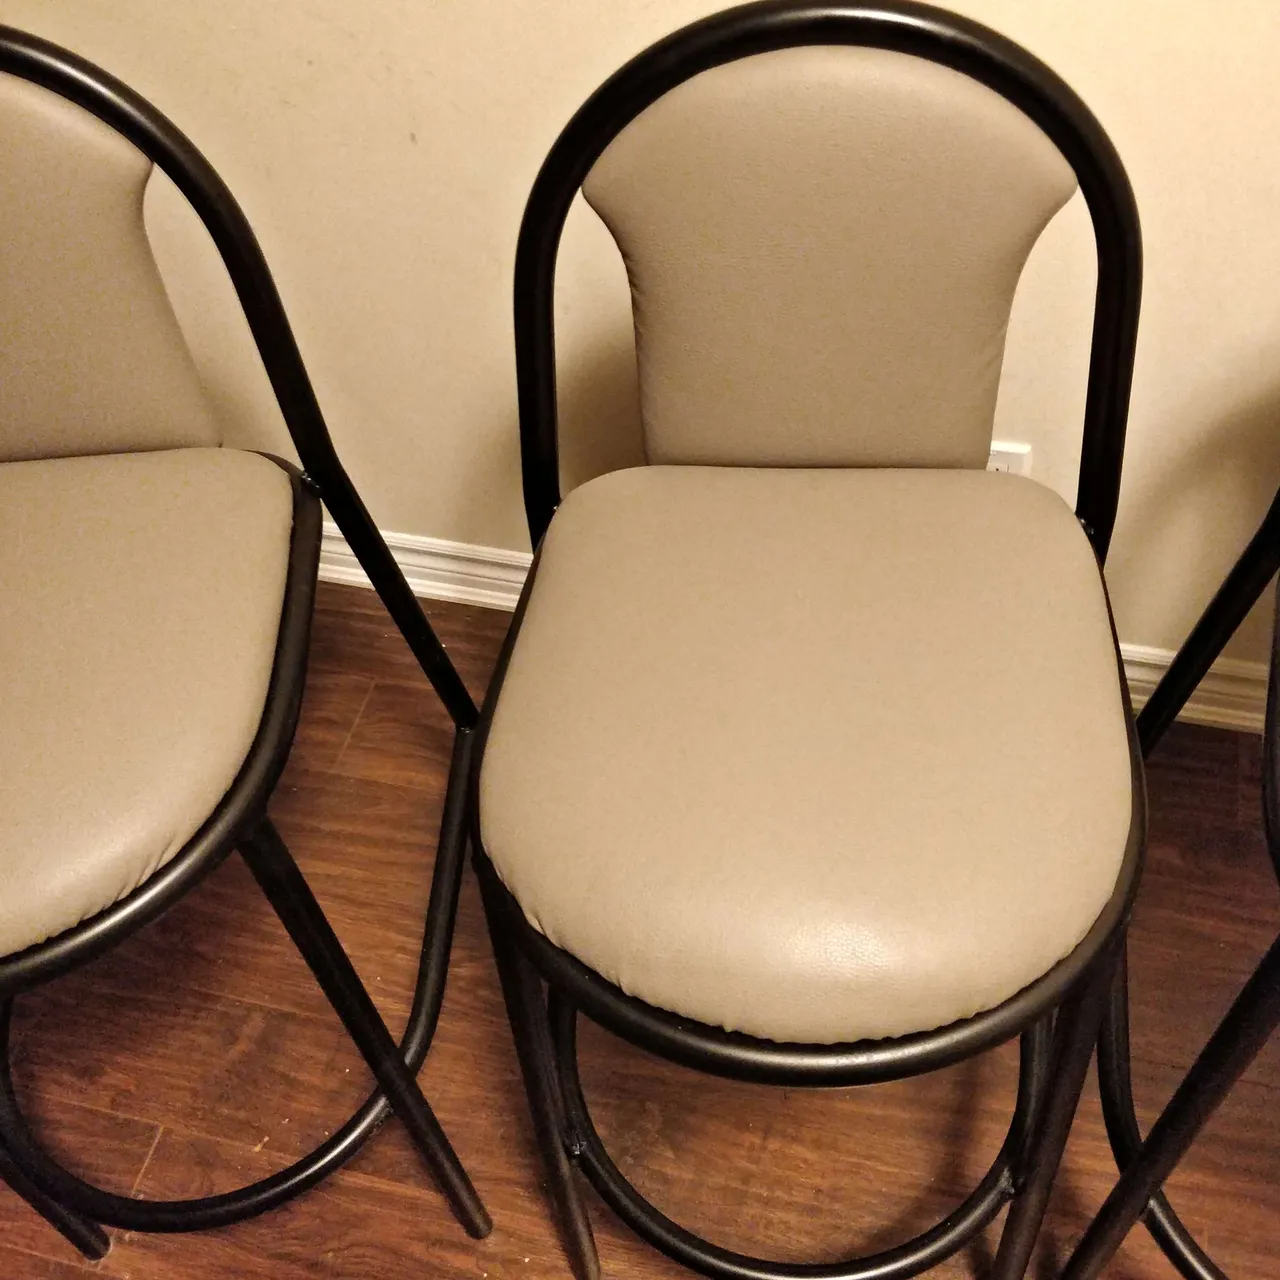 5 refurbished bar stools photo 4